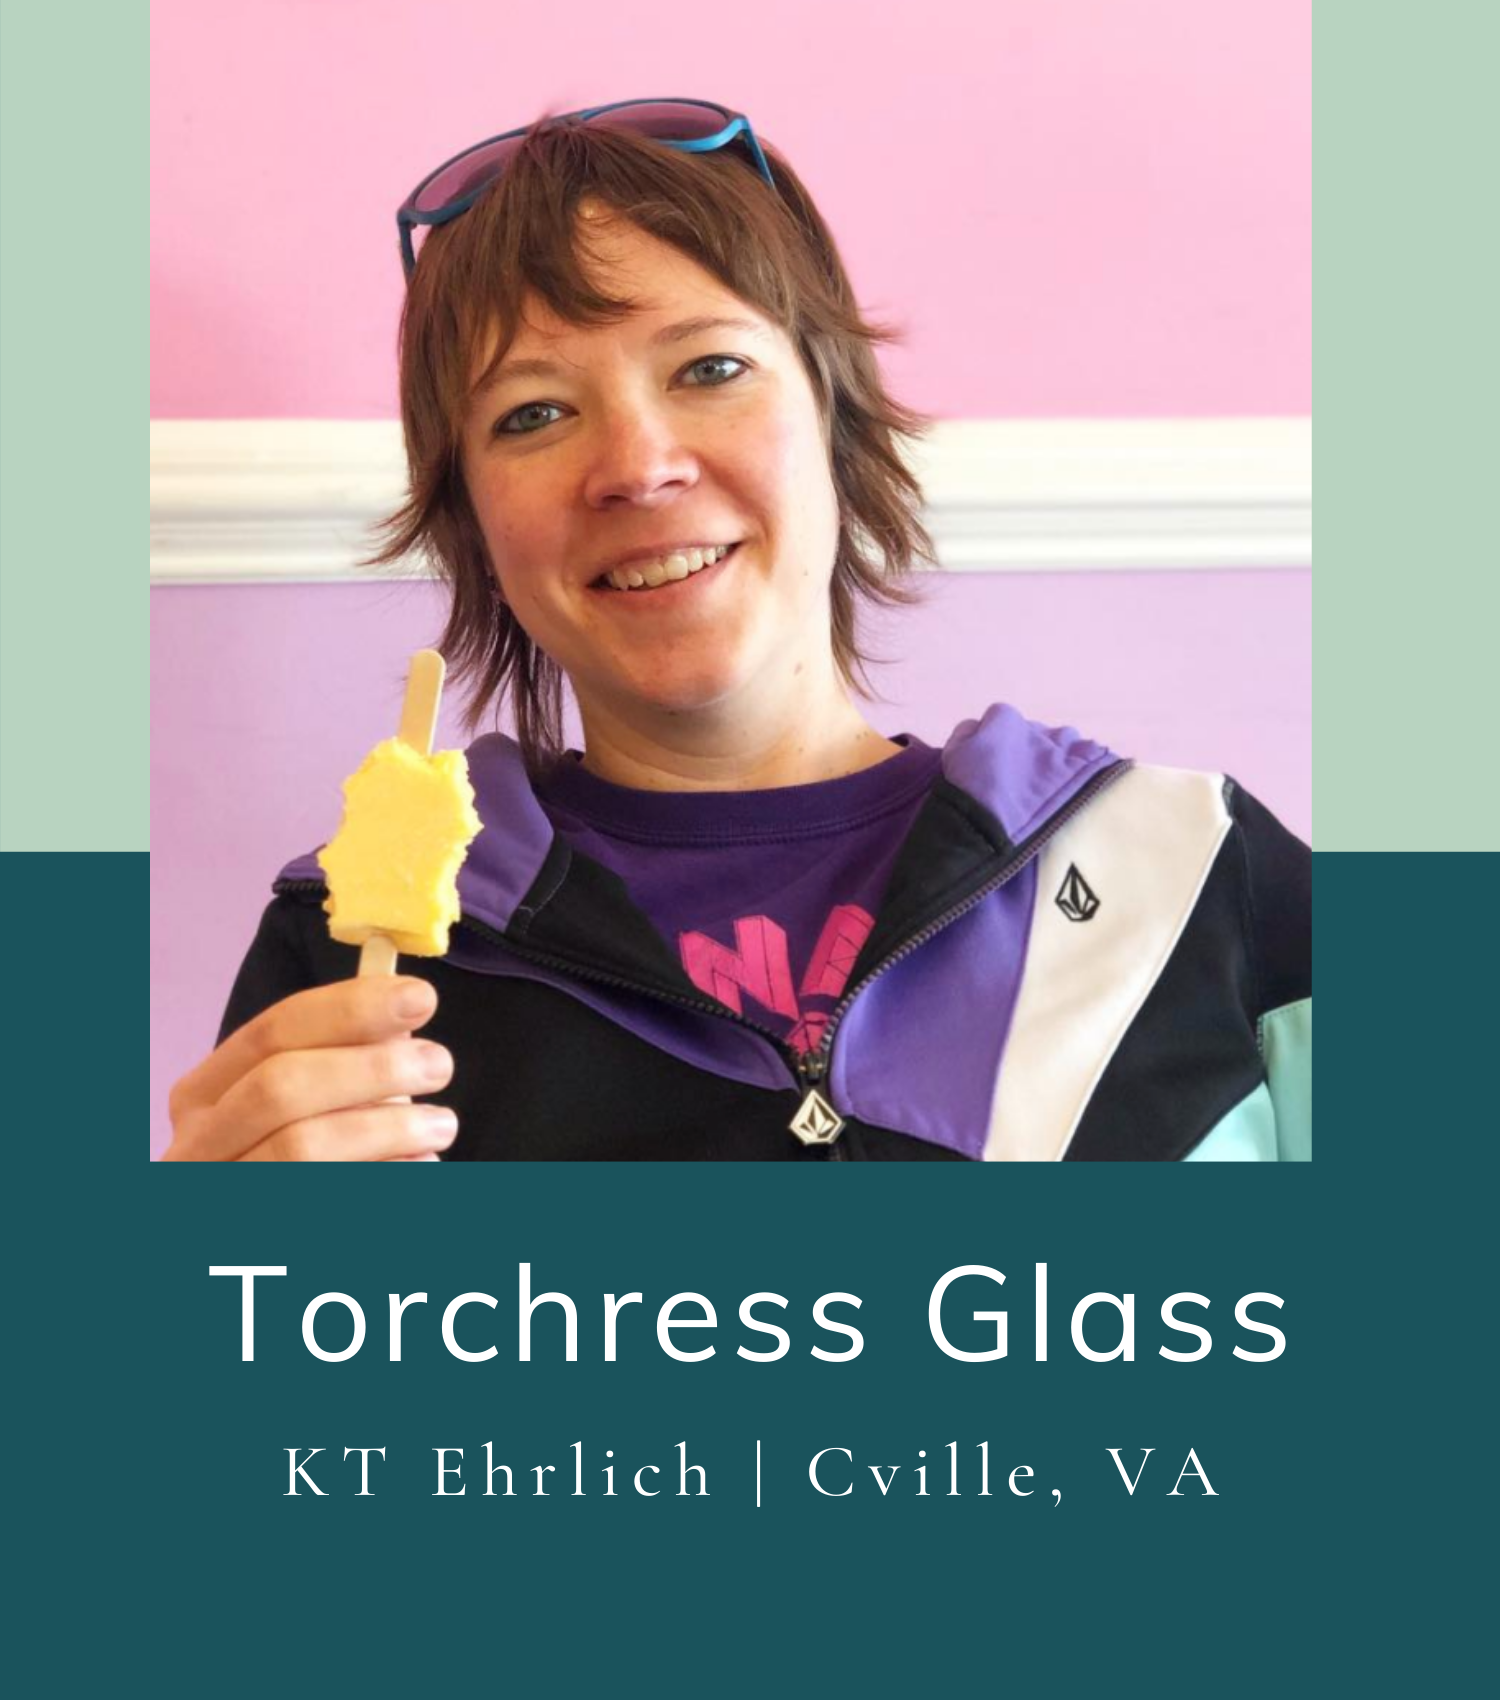 TORCHRESS GLASS